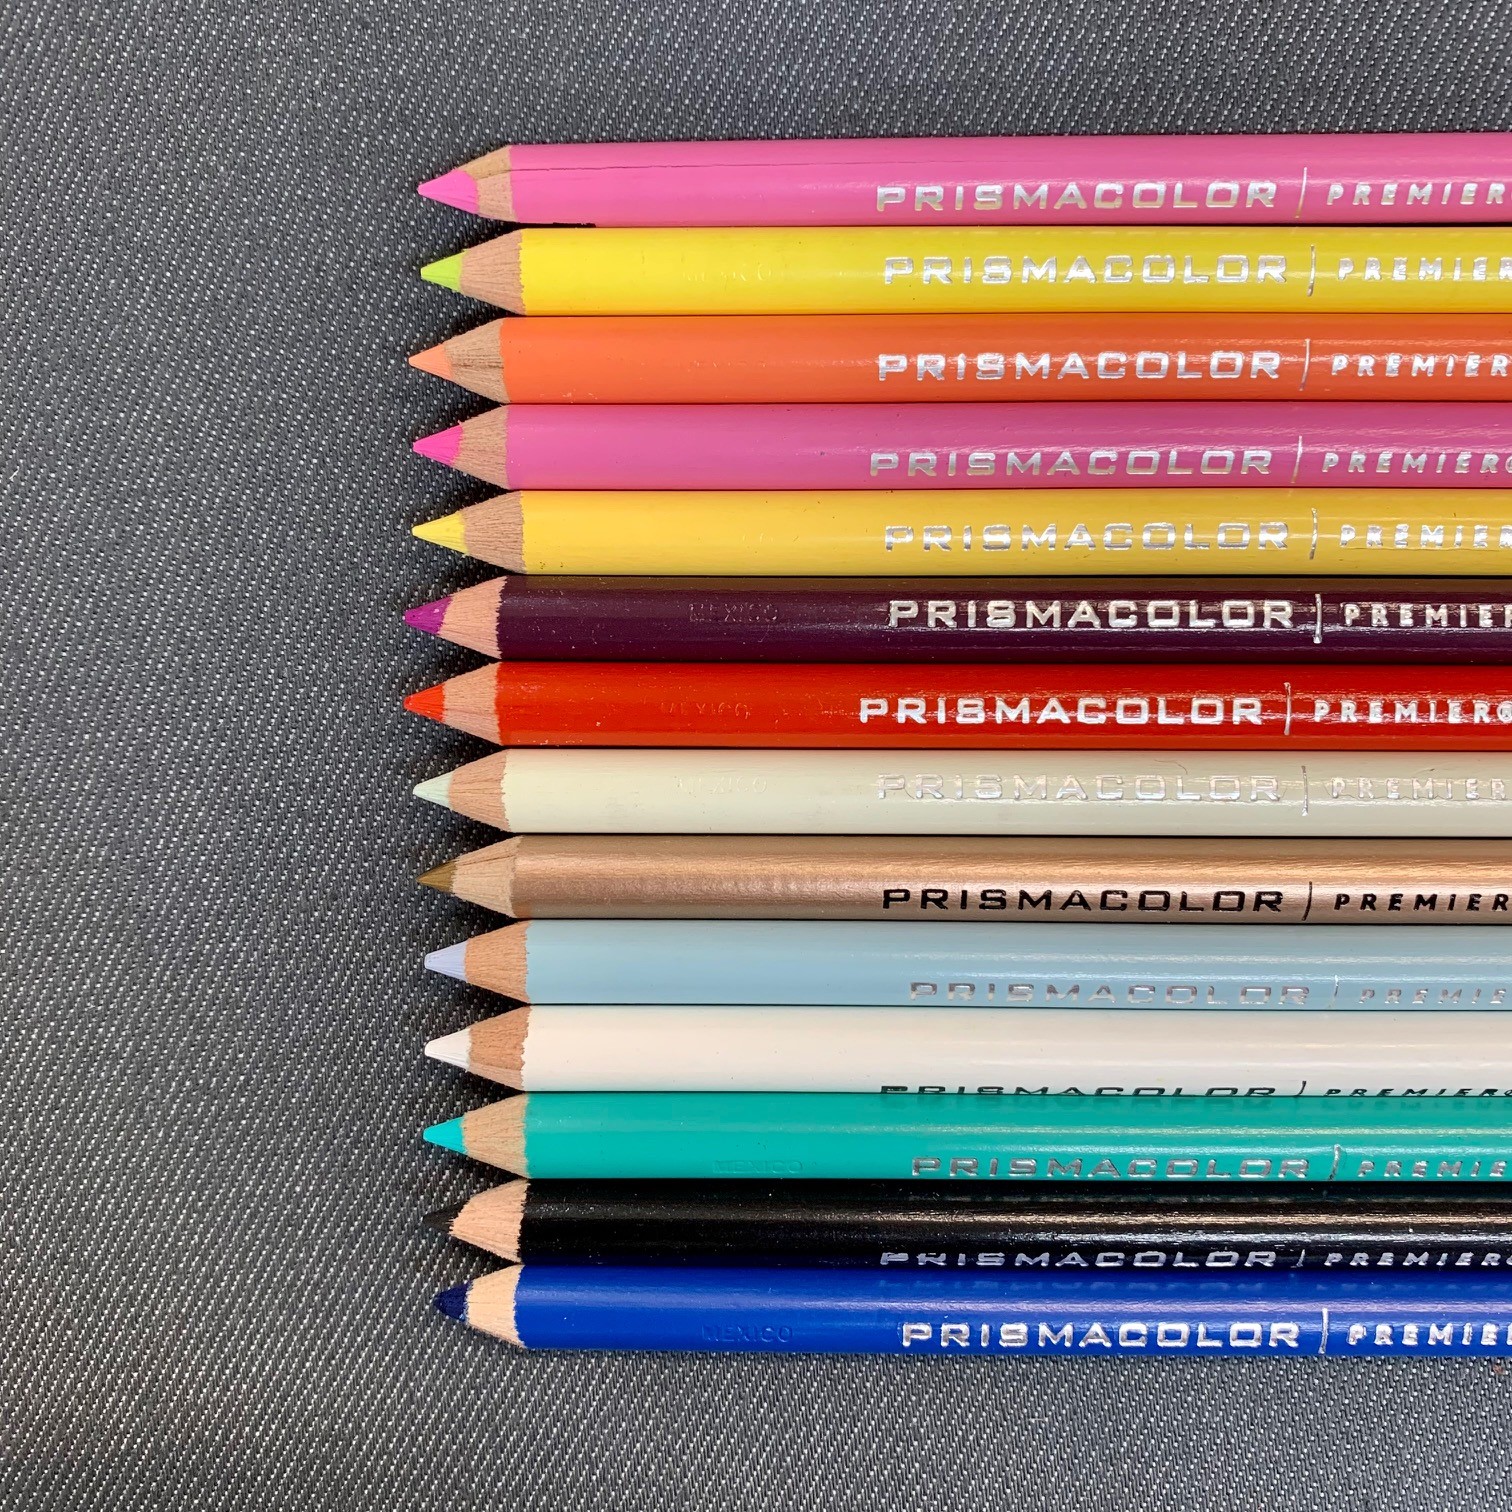 Prismacolor Blender Pencil Colorless (2 Piece) & Premier Pencil Sharpener